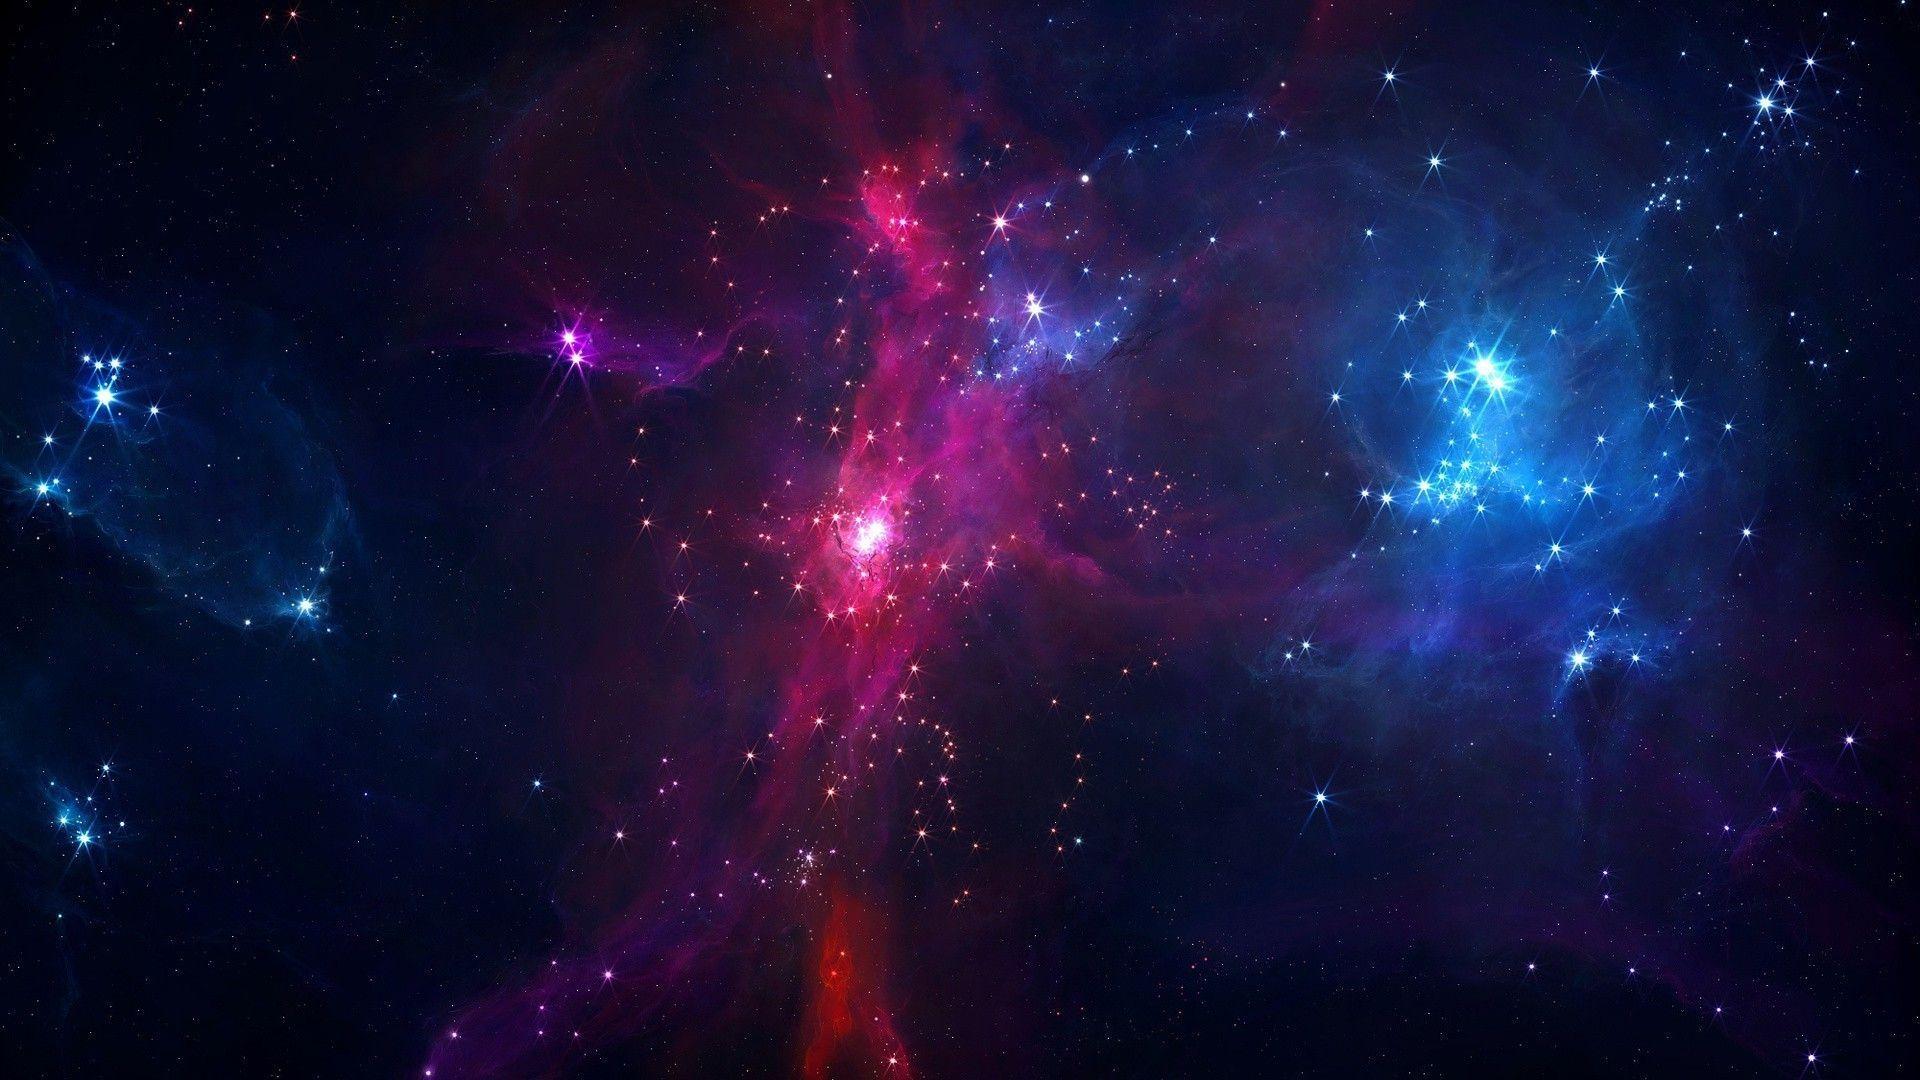 Nebula Wallpaper HD about space. Galáxias e Nebulosas